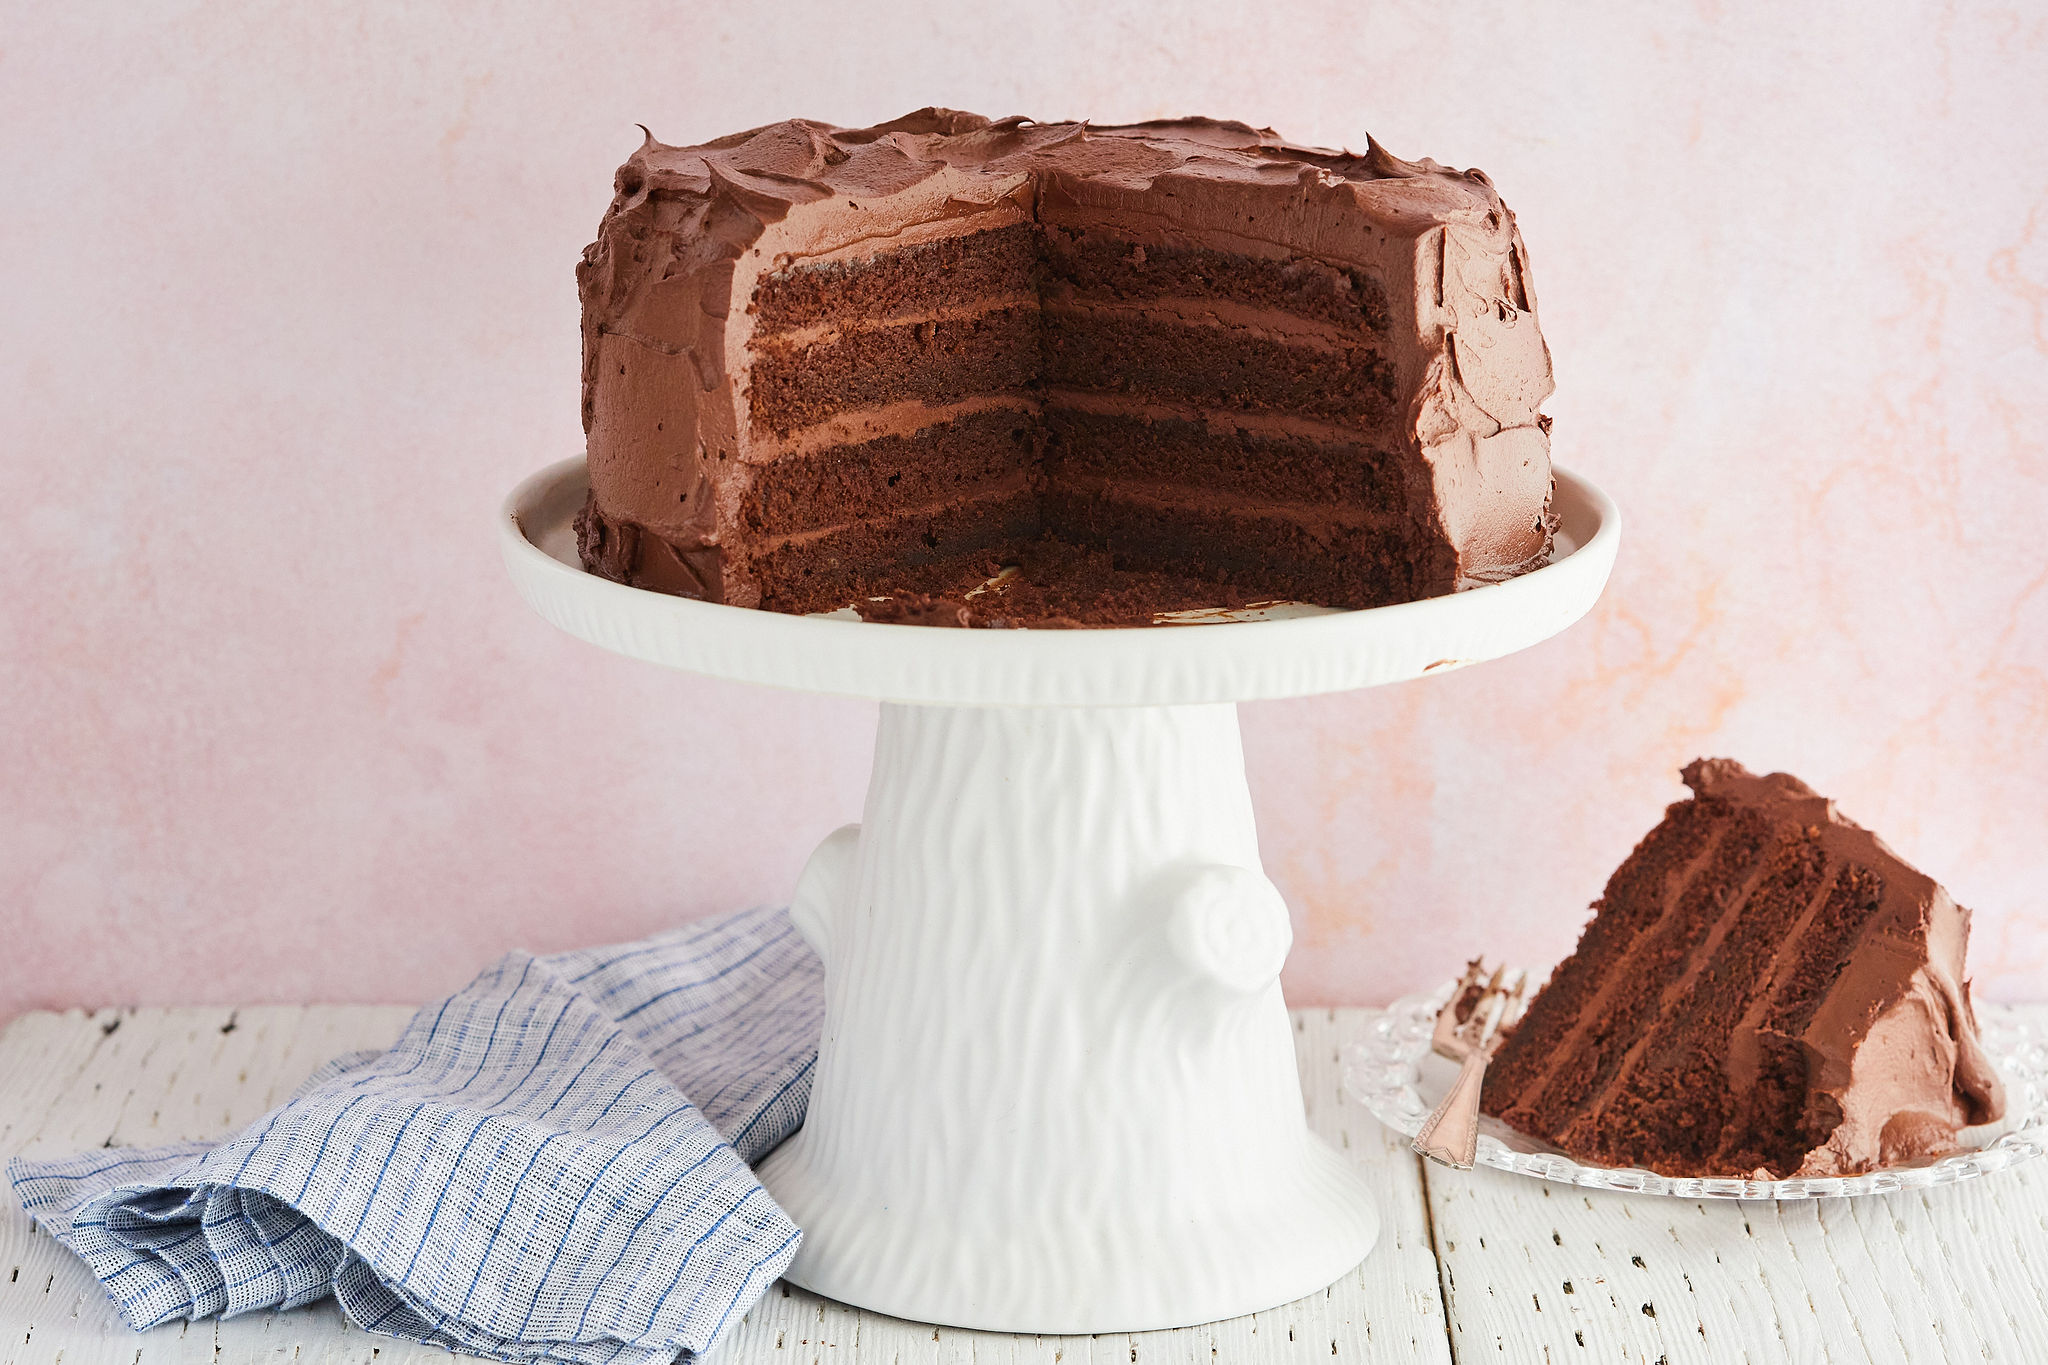 https://www.biggerbolderbaking.com/wp-content/uploads/2020/06/Best-Ever-Chocolate-Cake-WS-Thumbnail-FINAL.jpg